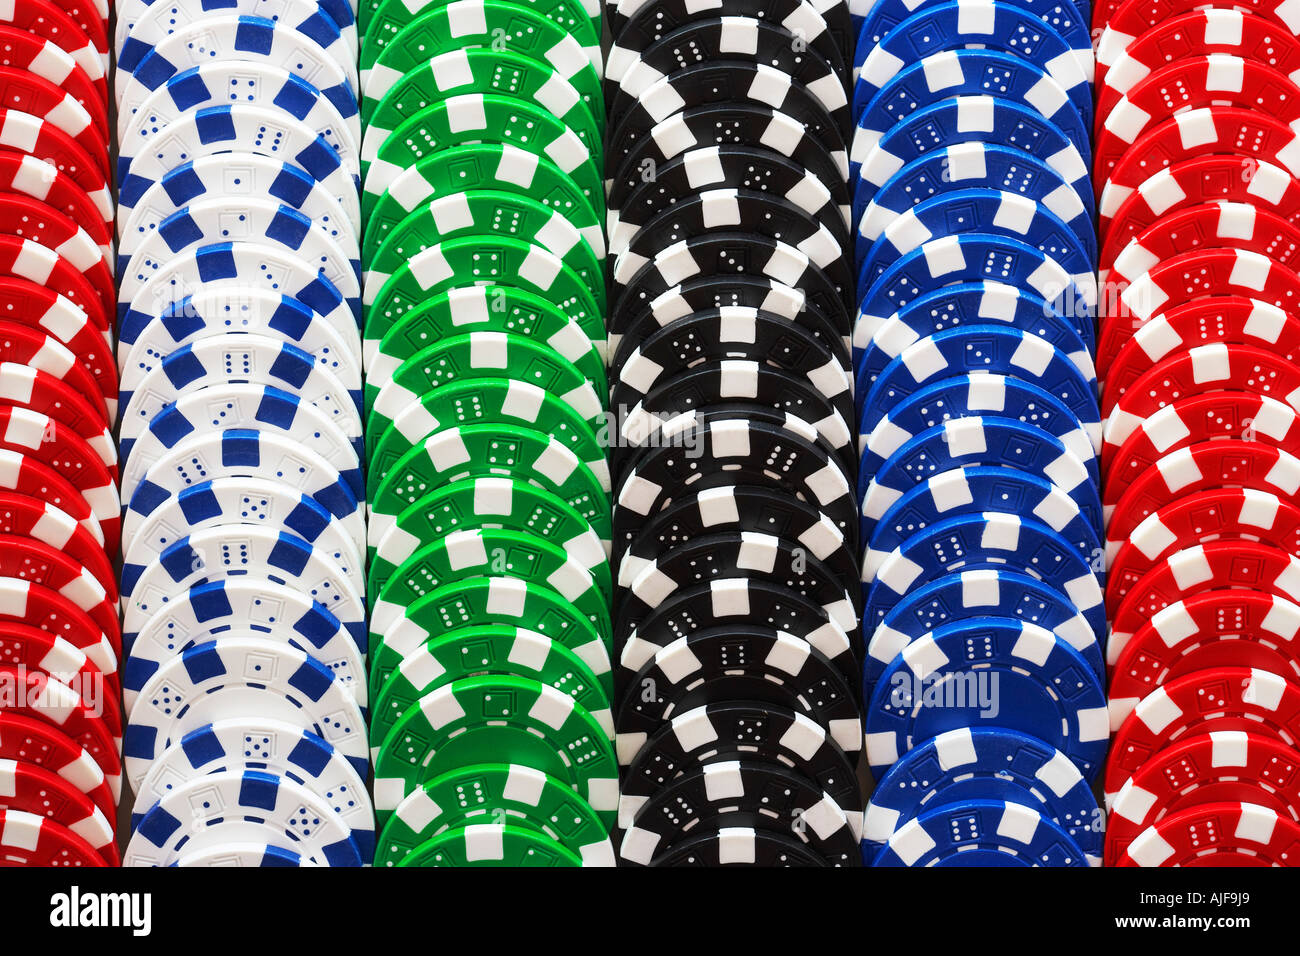 Rows of gambling chips, close-up Stock Photo